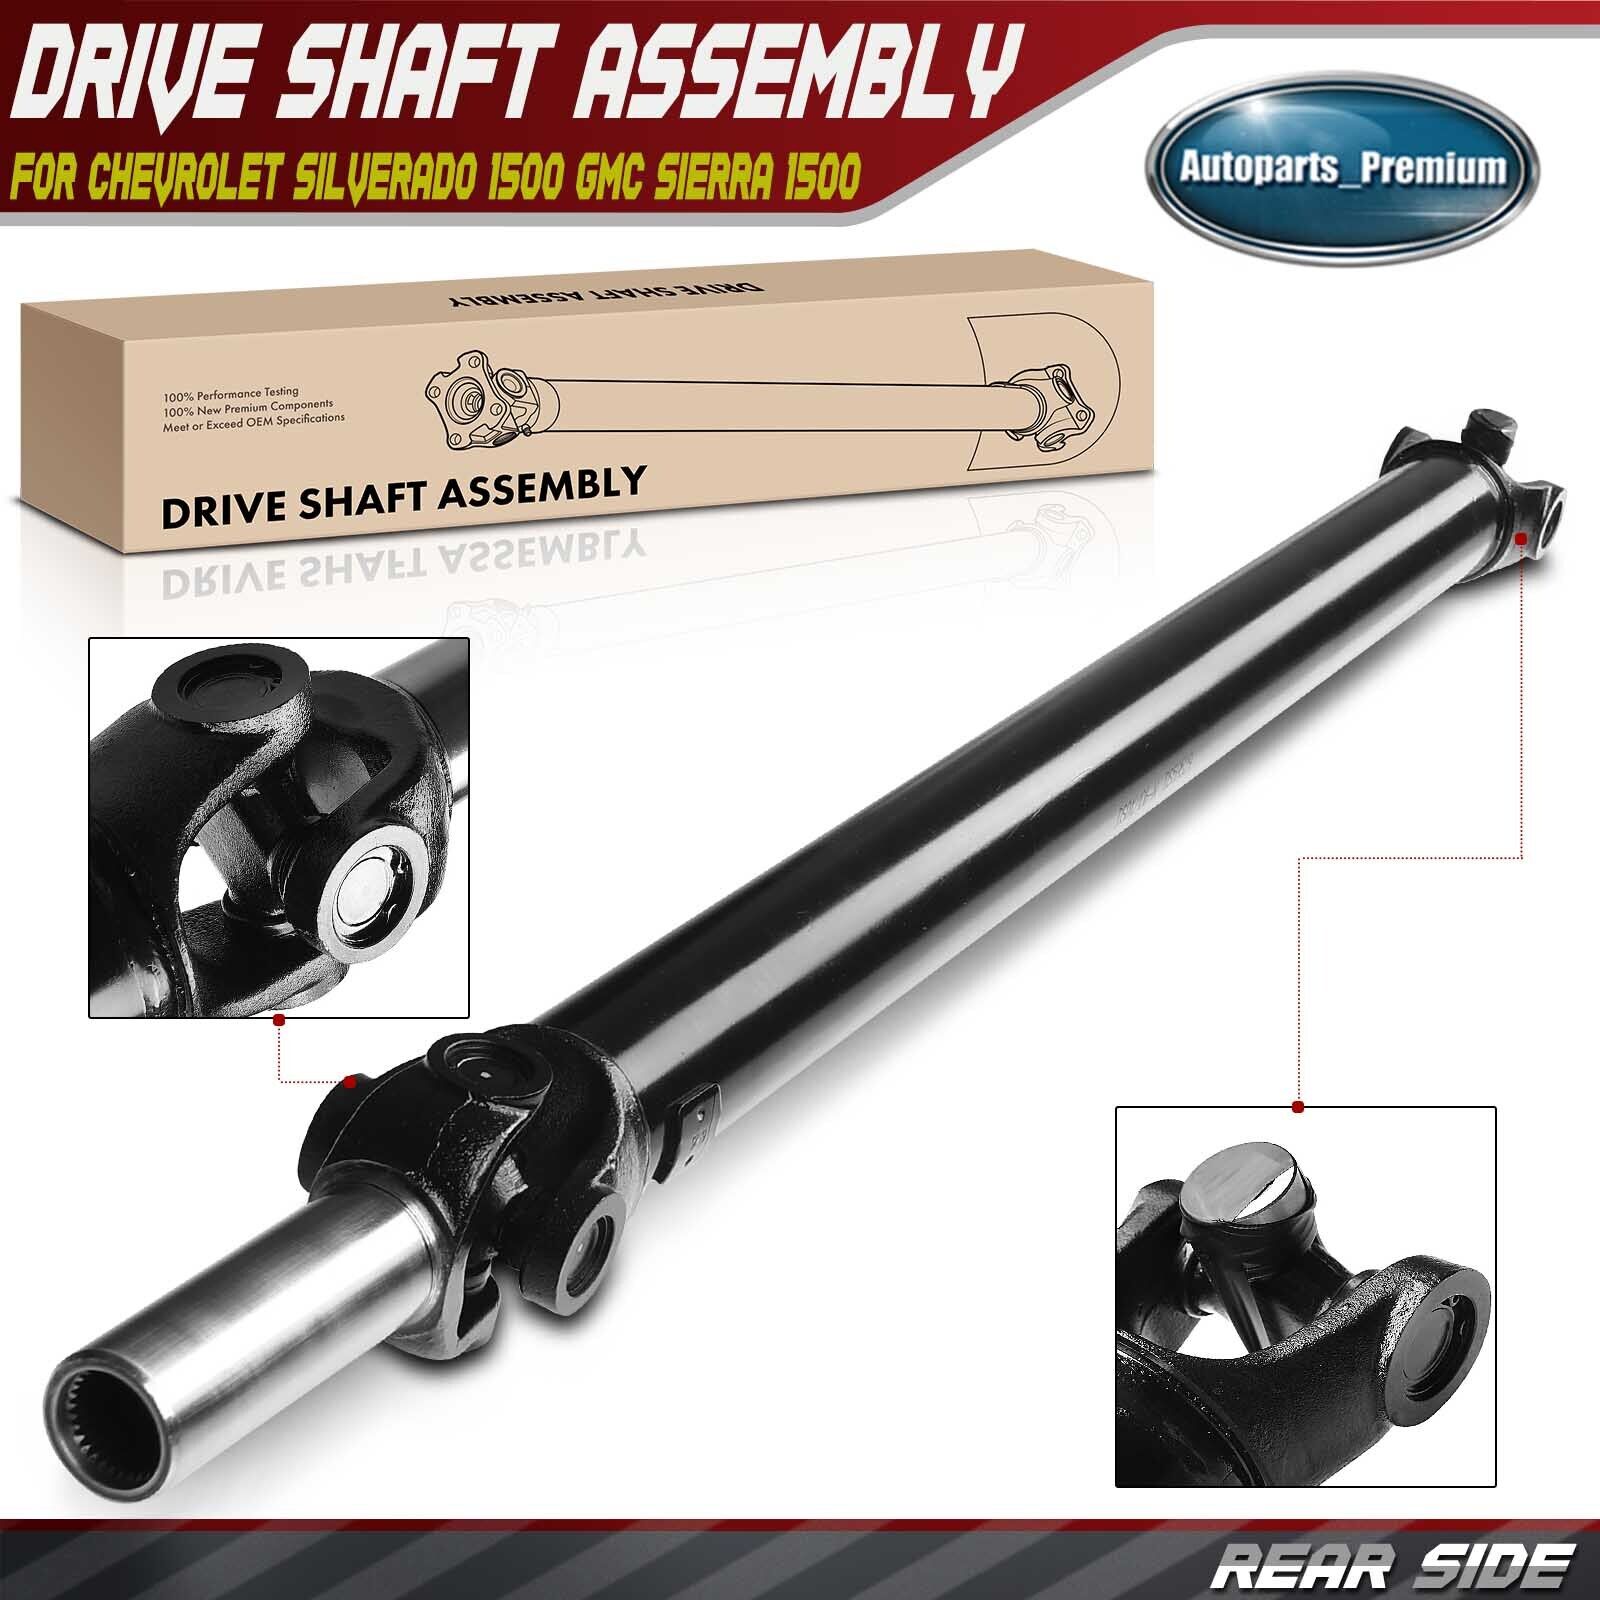 Rear Driveshaft Prop Shaft Assembly for Chevy Silverado 1500 GMC Sierra 1500 4WD